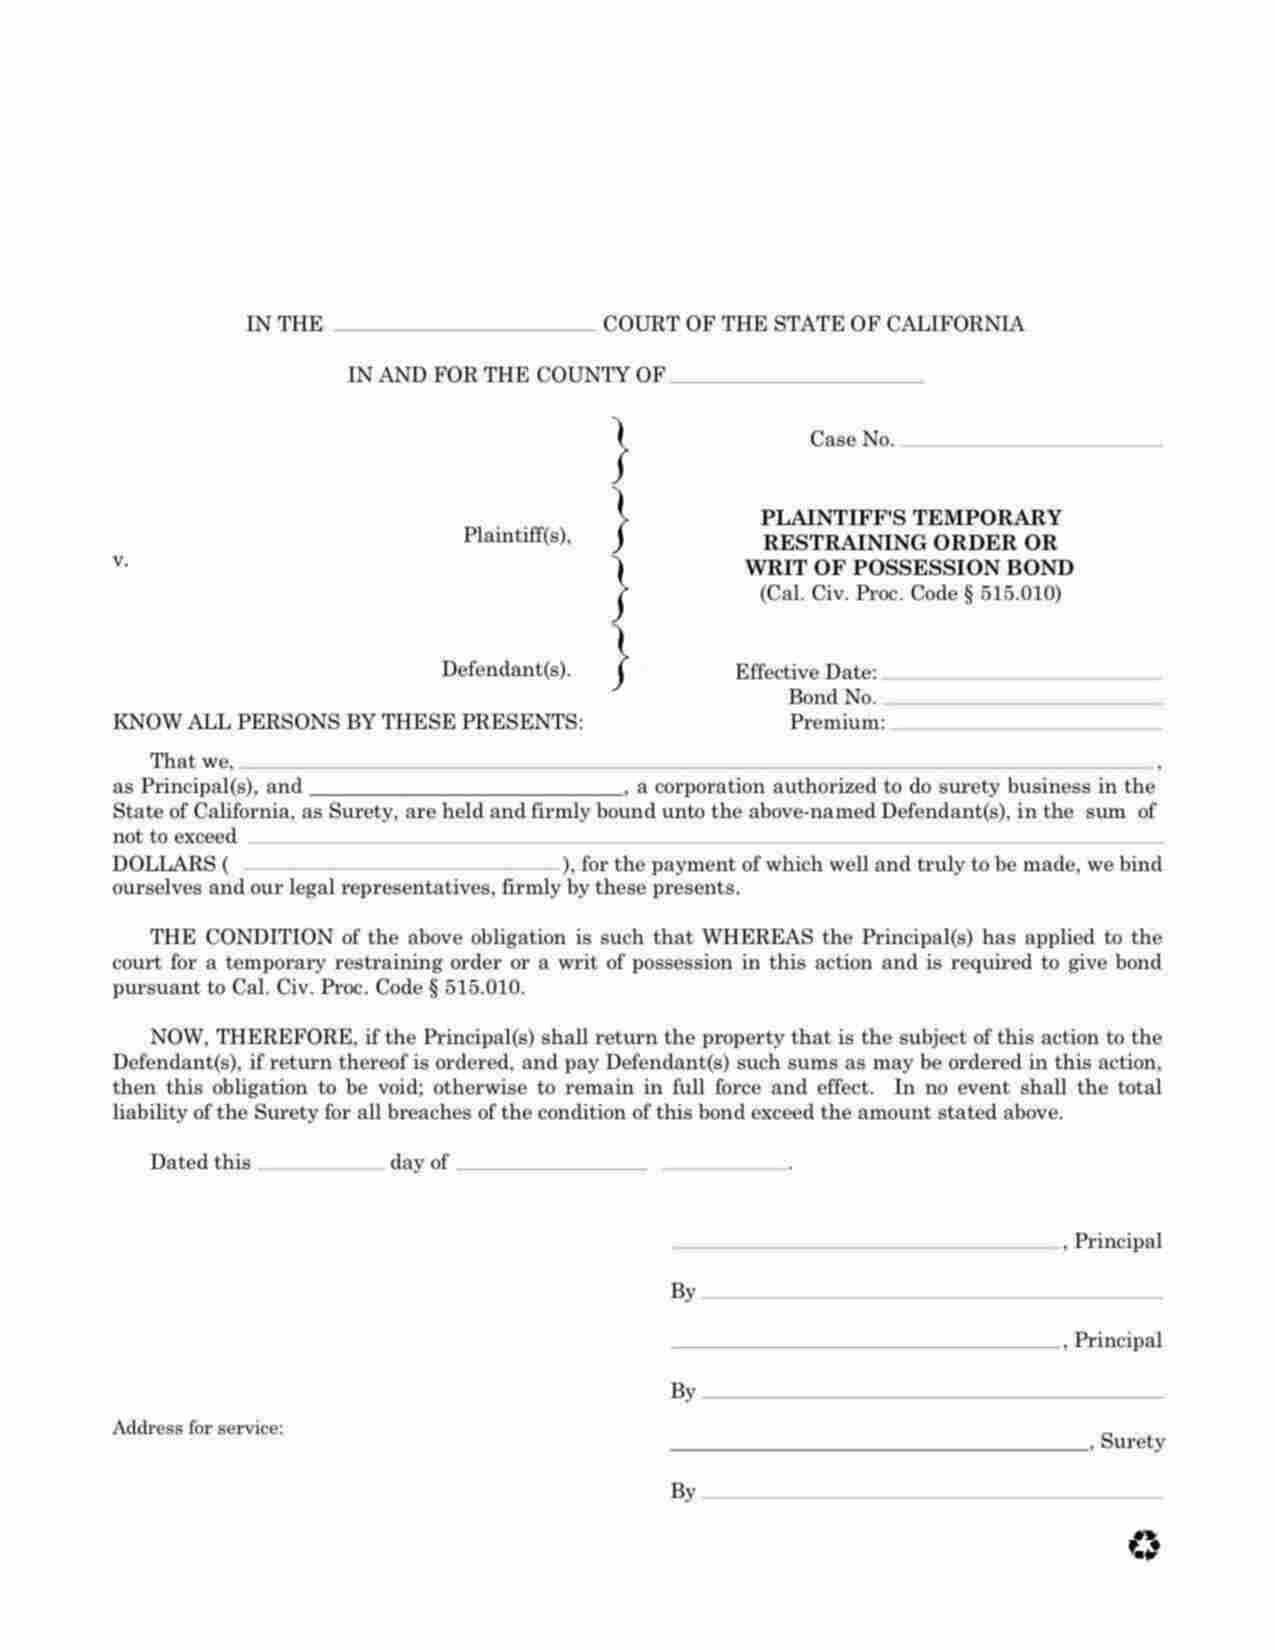 California Plaintiffs Temporary Restraining Order or Writ of Possession Bond Form